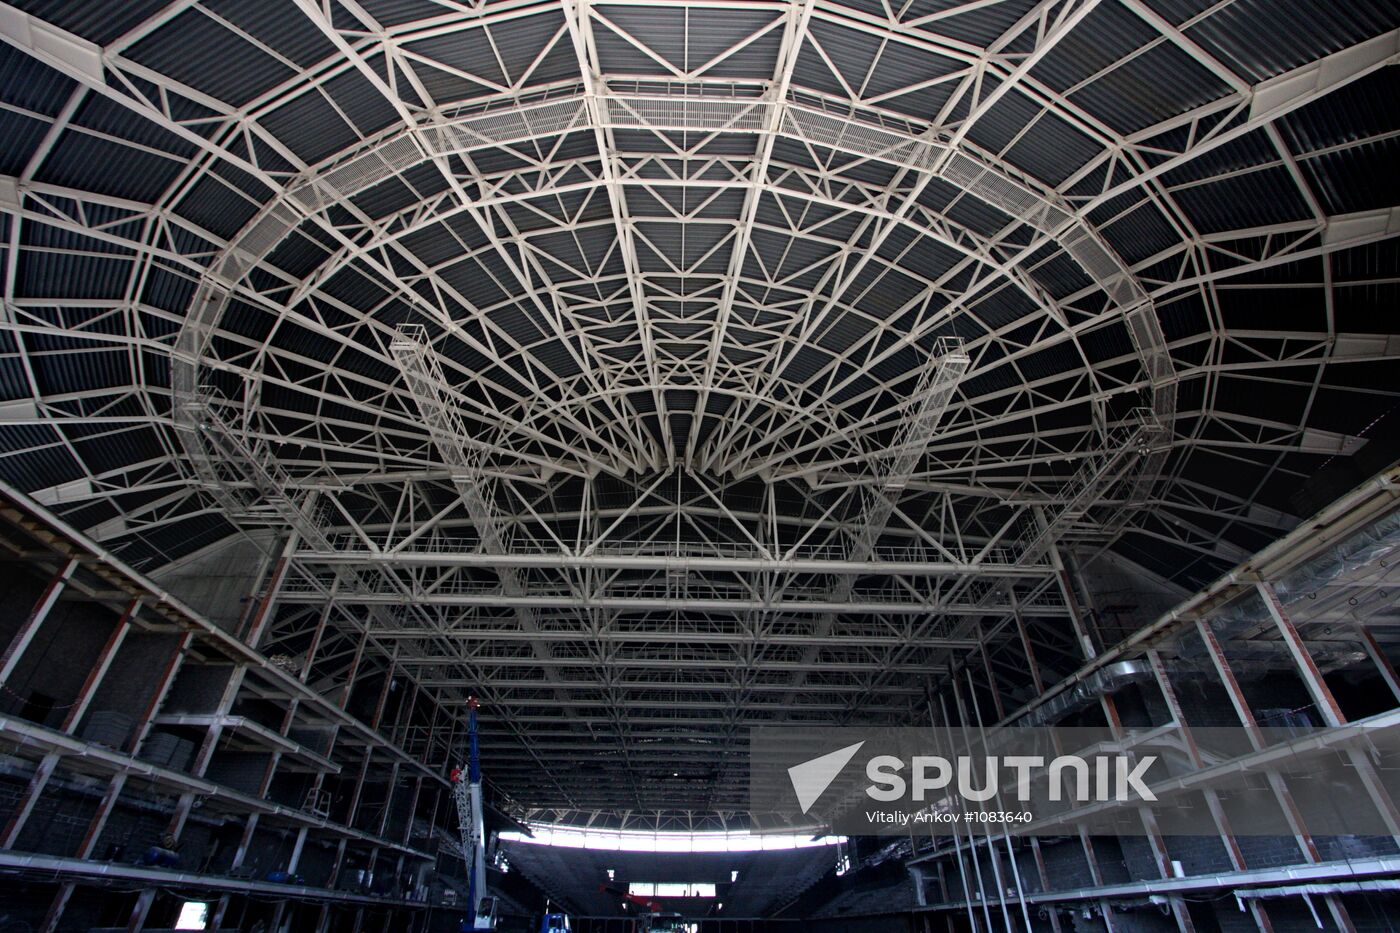 Concert and sports center under construction in Vladivostok